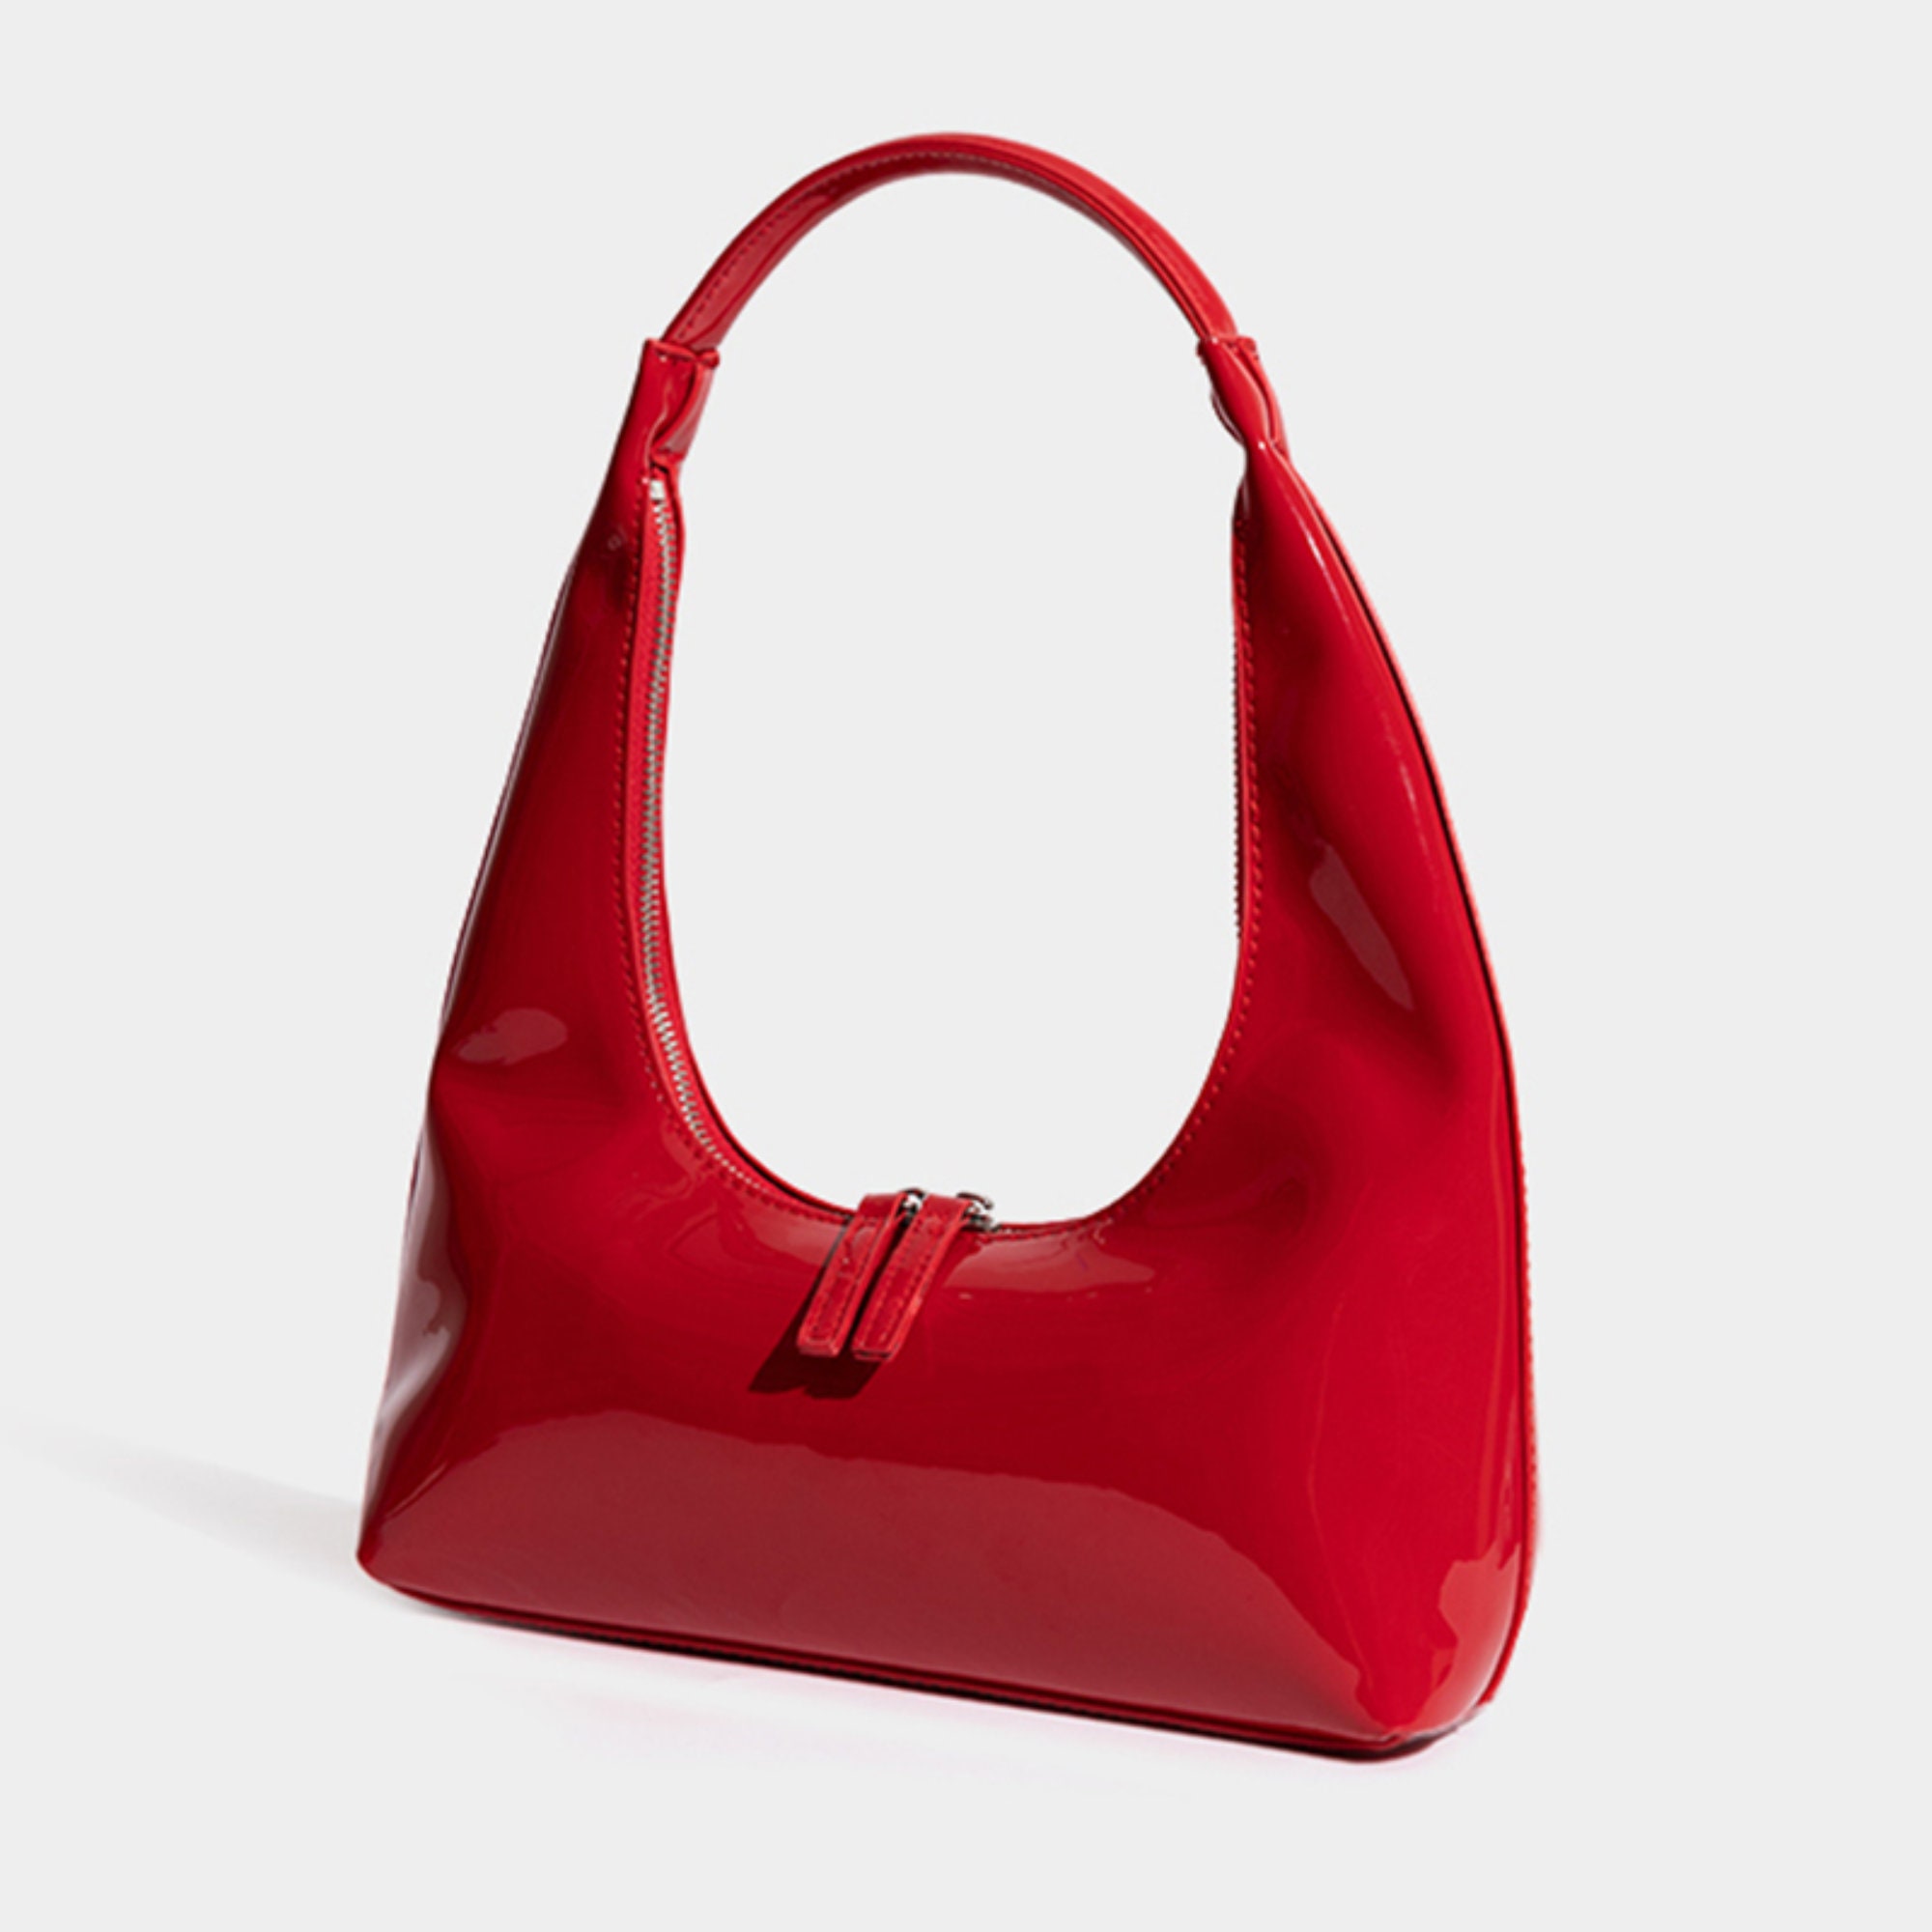 Women's All Seasons Pu Leather Solid Color Basic Vintage Style Square  Zipper Shoulder Bag Crossbody Bag Underarm Bag